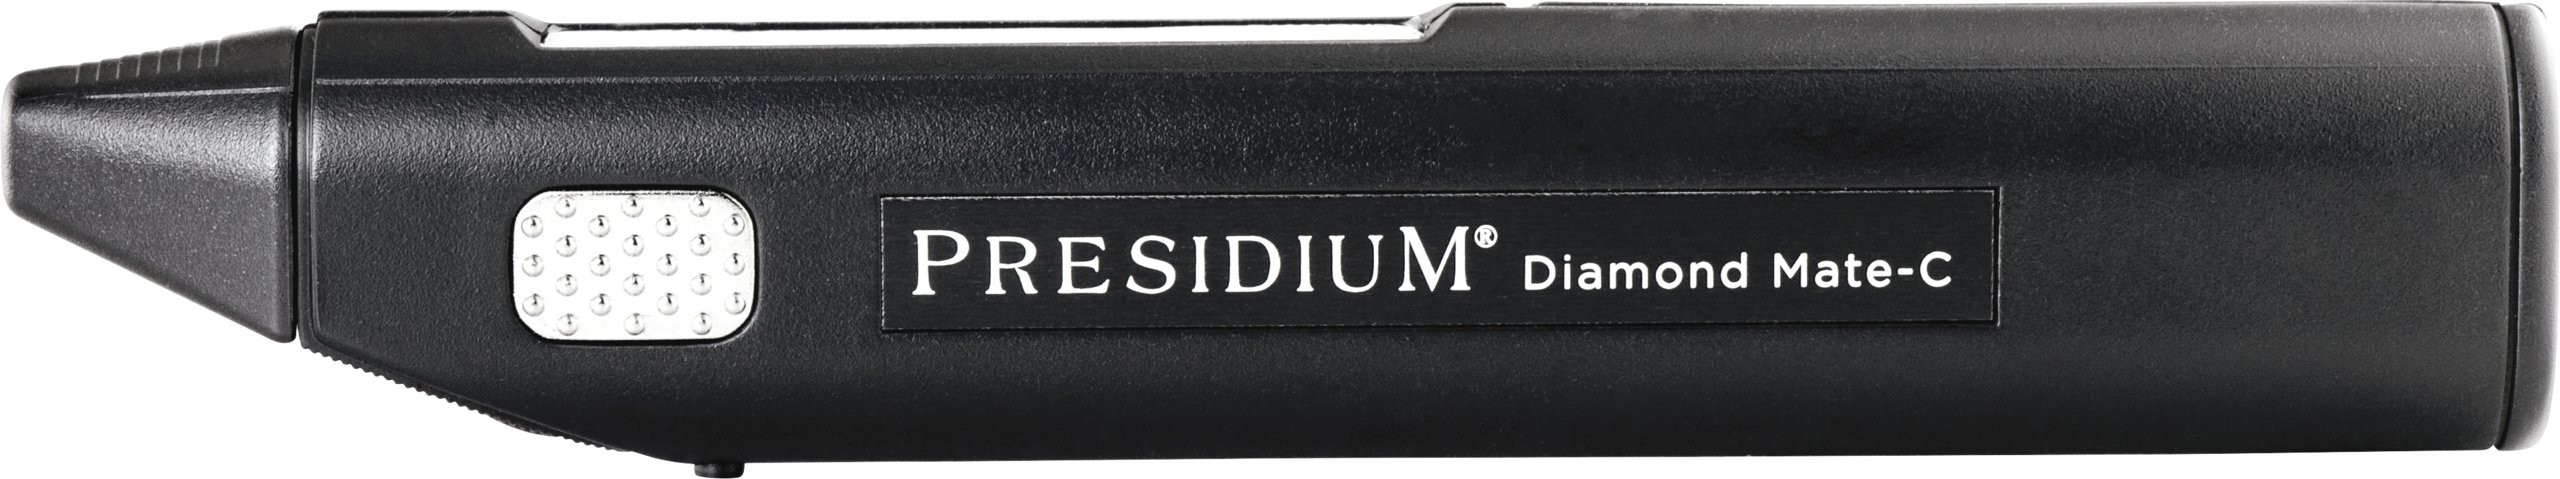 Presidium® Diamond Mate-A - DIAMOND TESTER ( PDMT ) – uptowntools